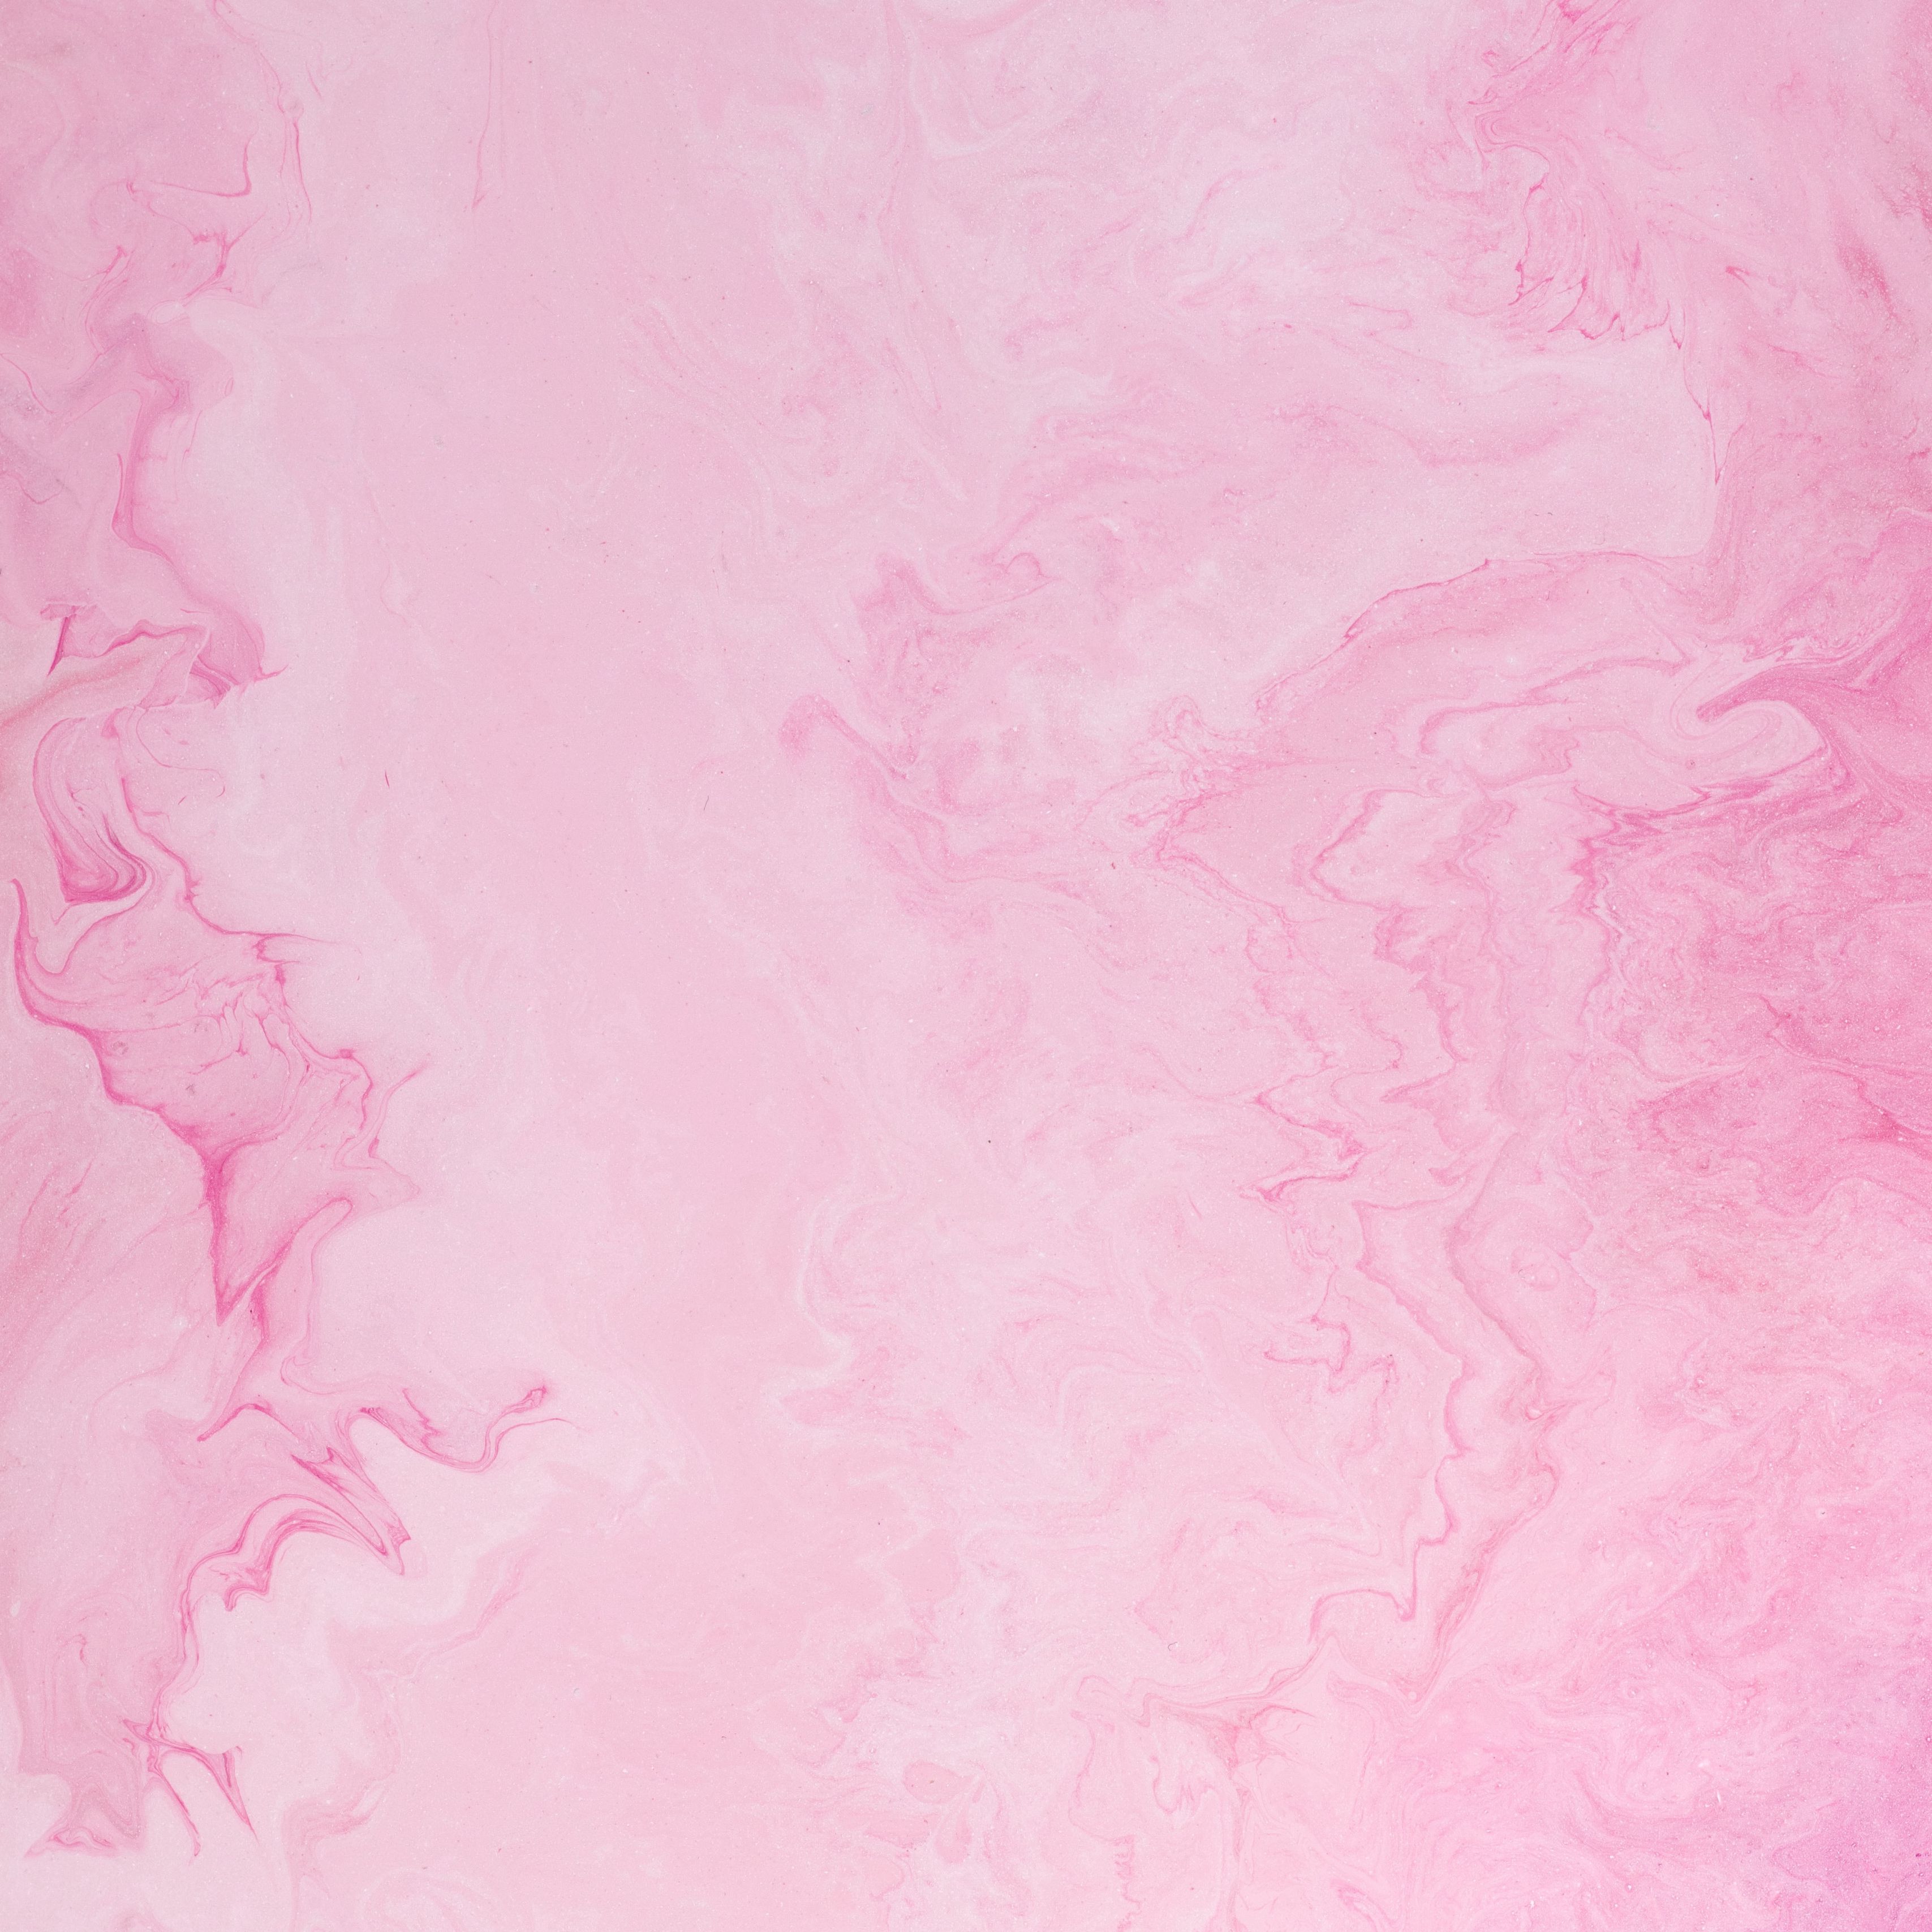 Pink Ipad Pro Wallpapers